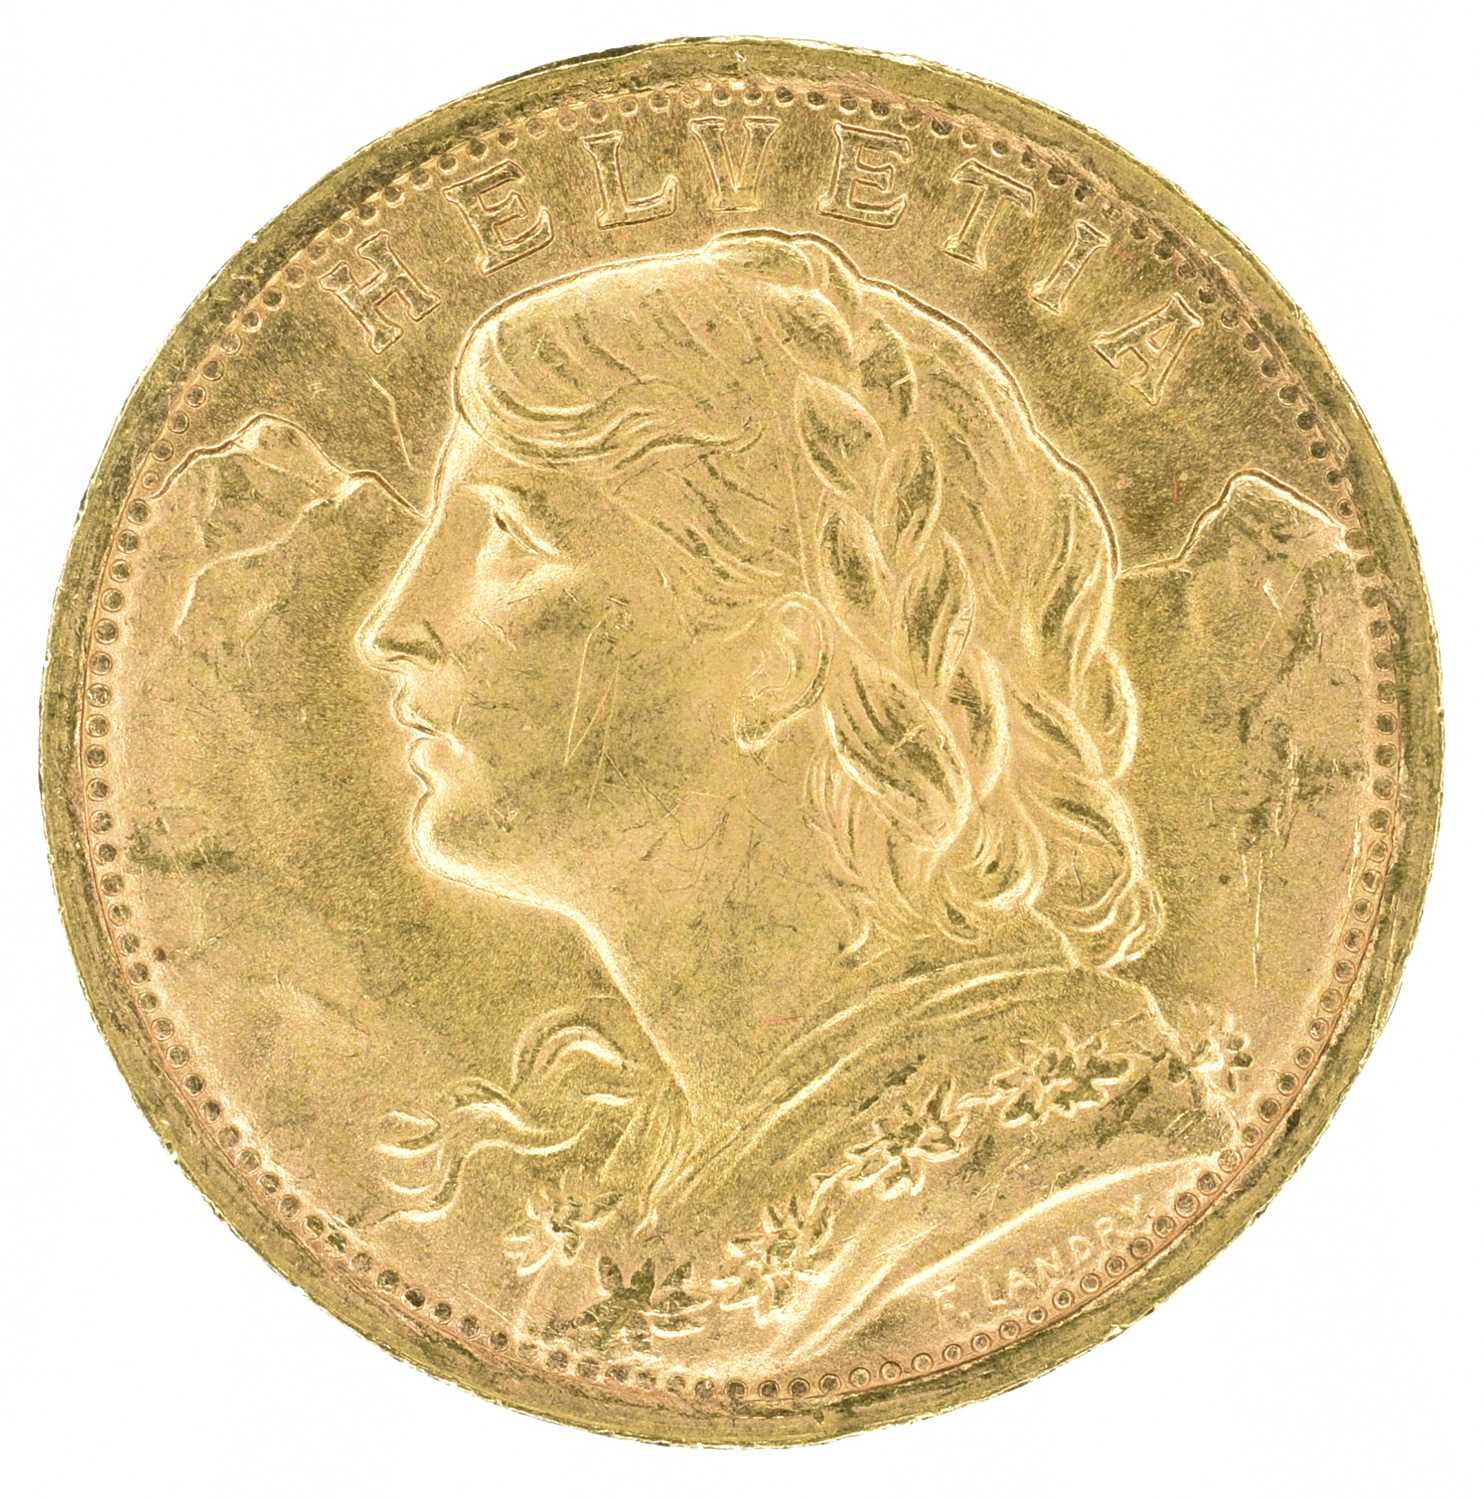 Switzerland, Helvetia, 1935, 20 Franc gold coin.